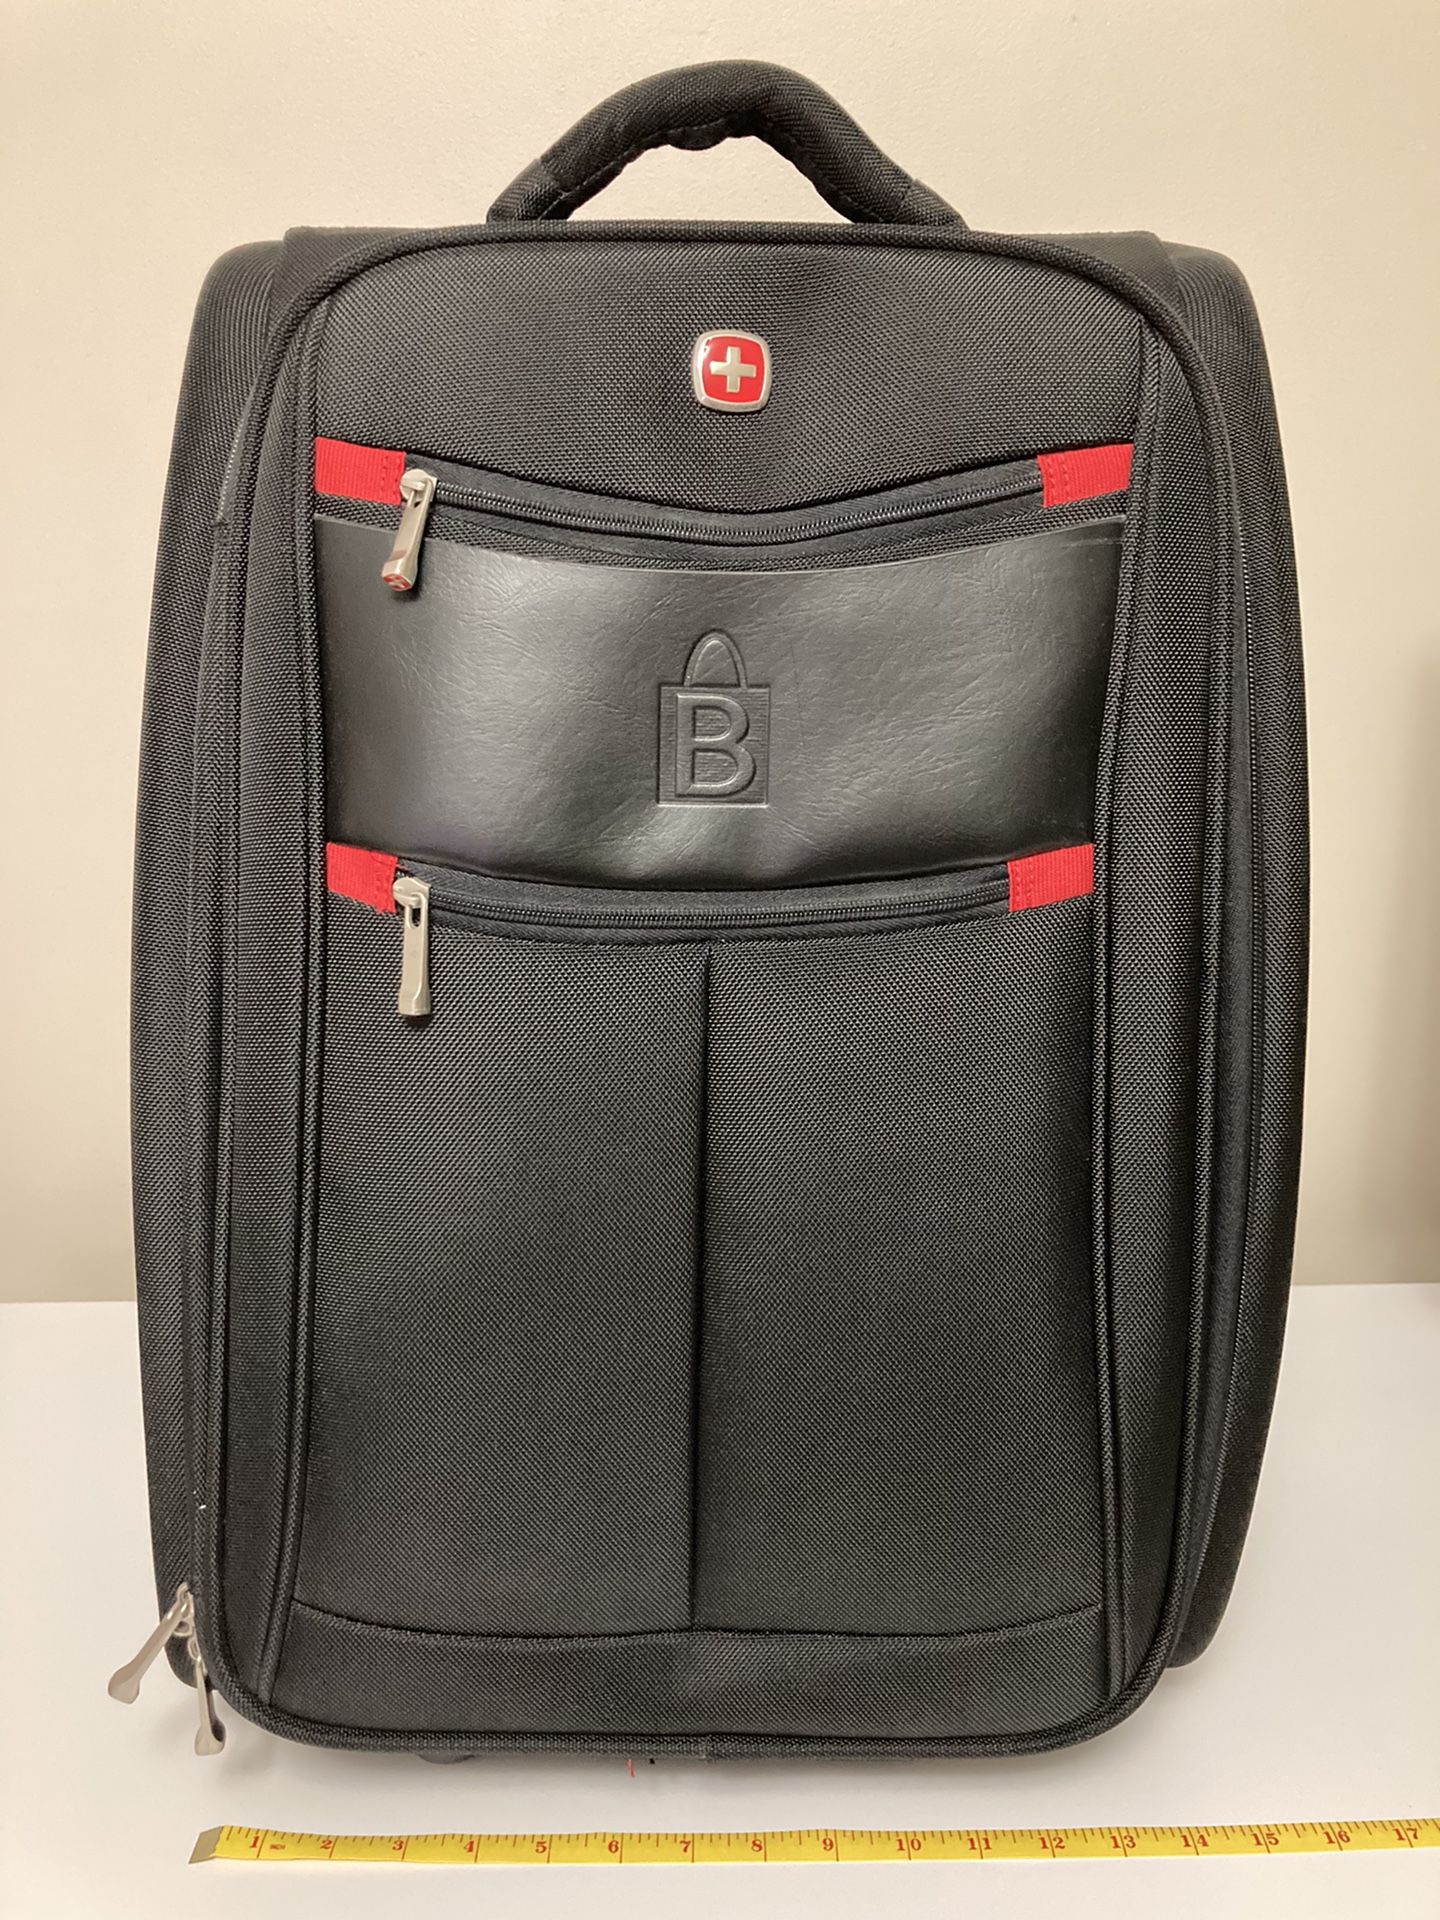 Swiss Wenger Travel Suitcase